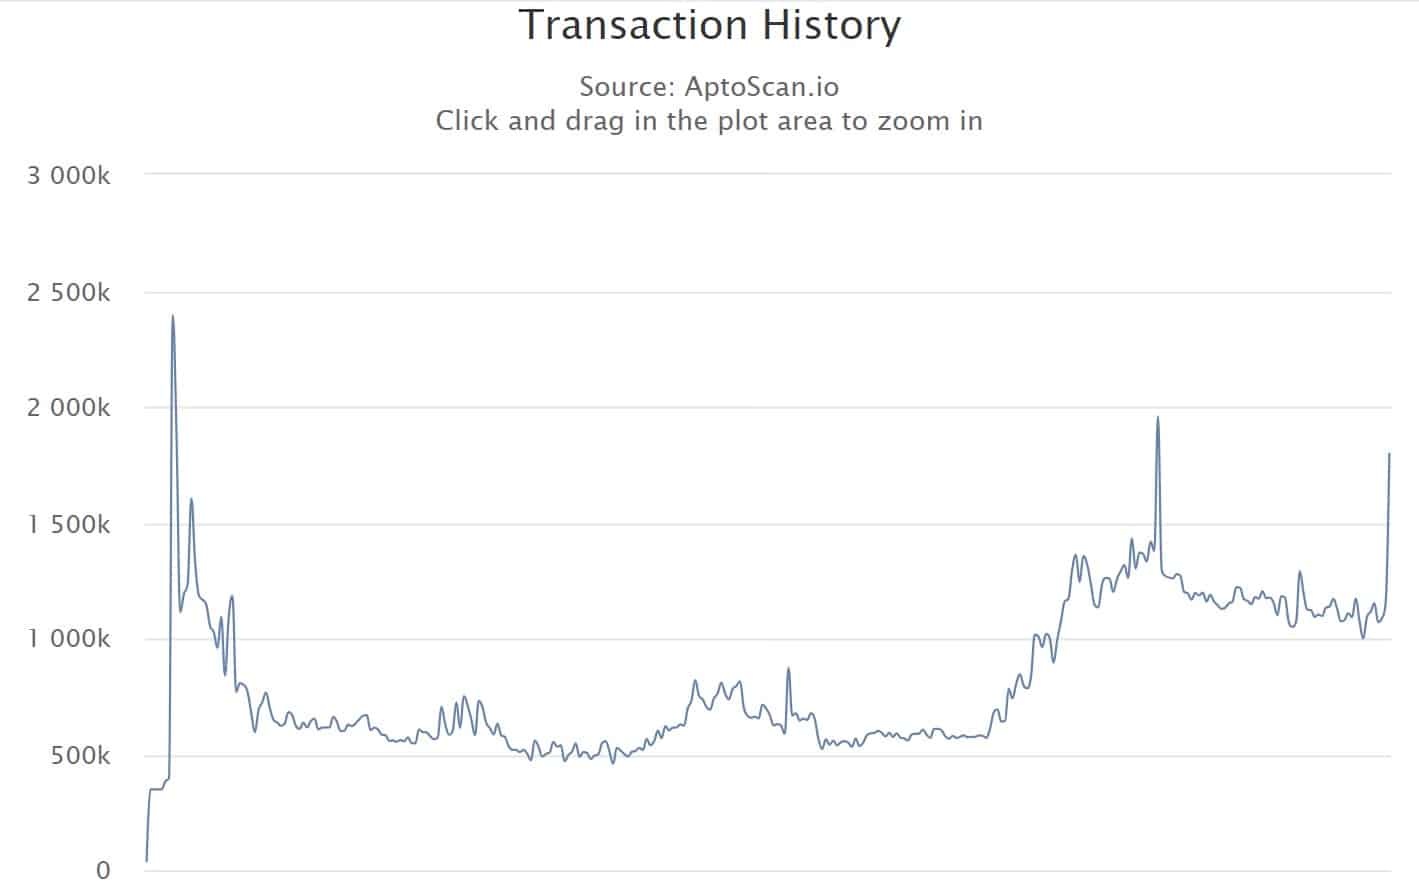 Daily transaction history on Aptos